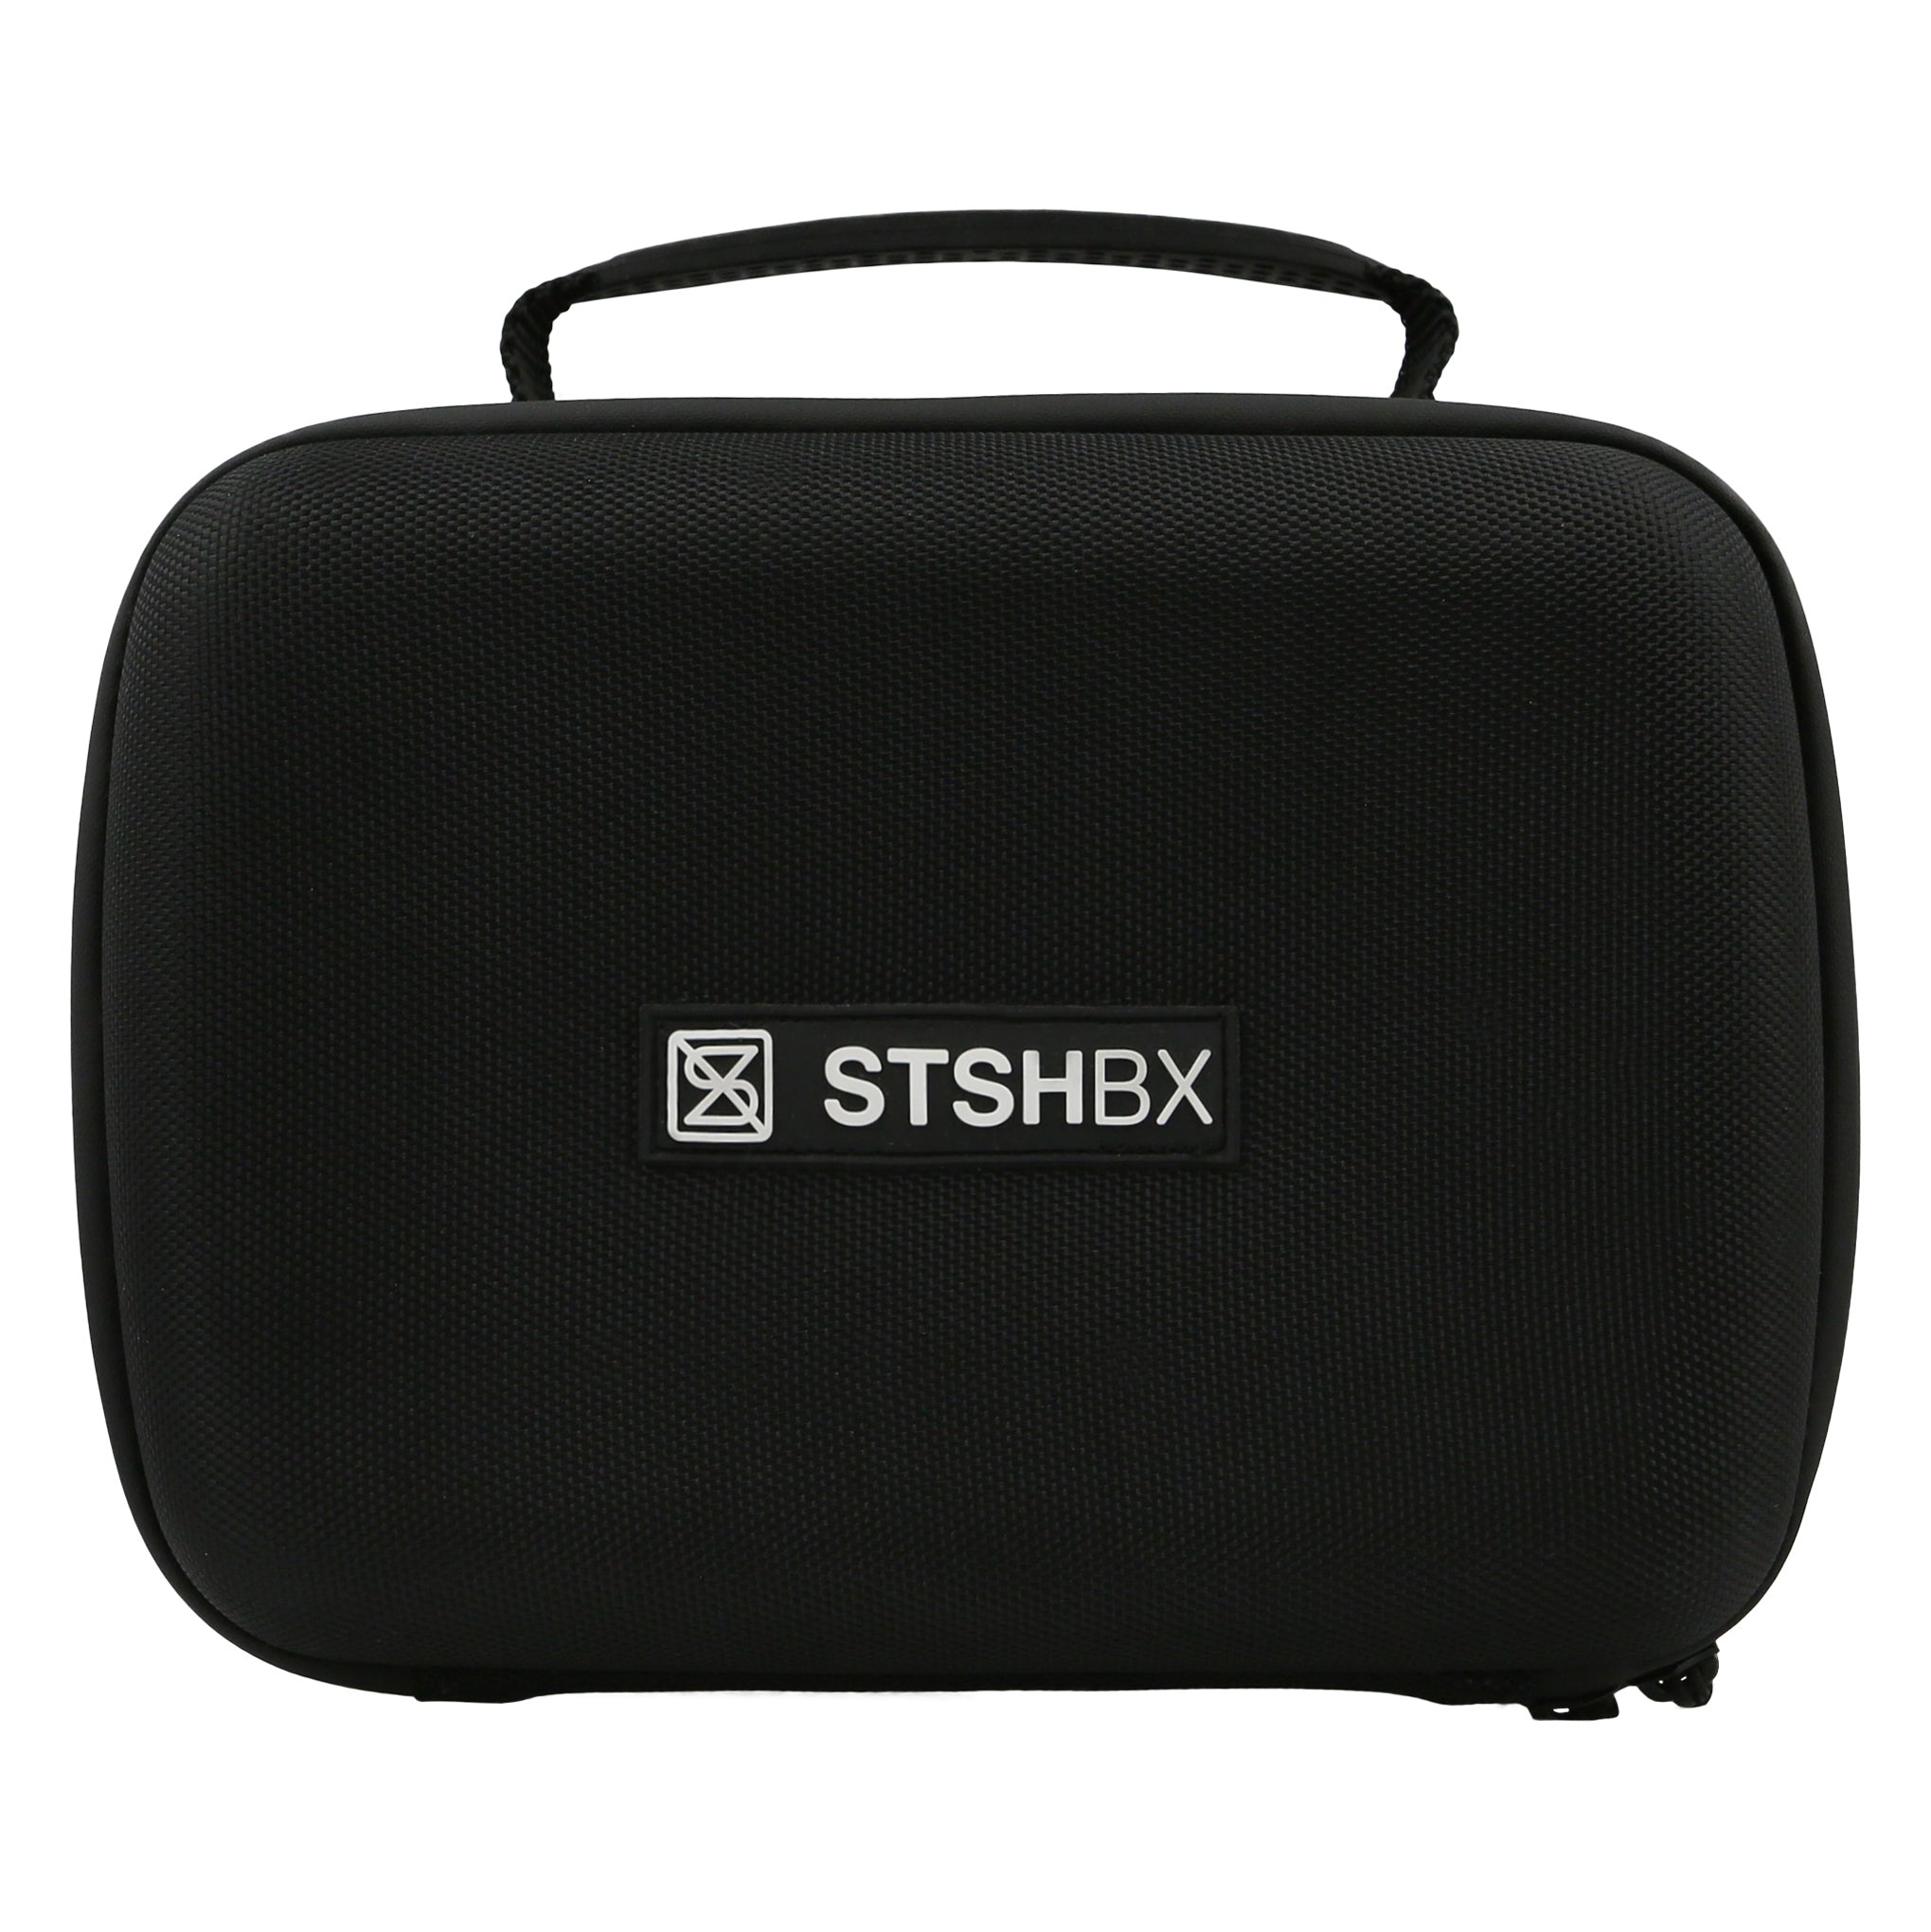 STSHBX Carrying Case